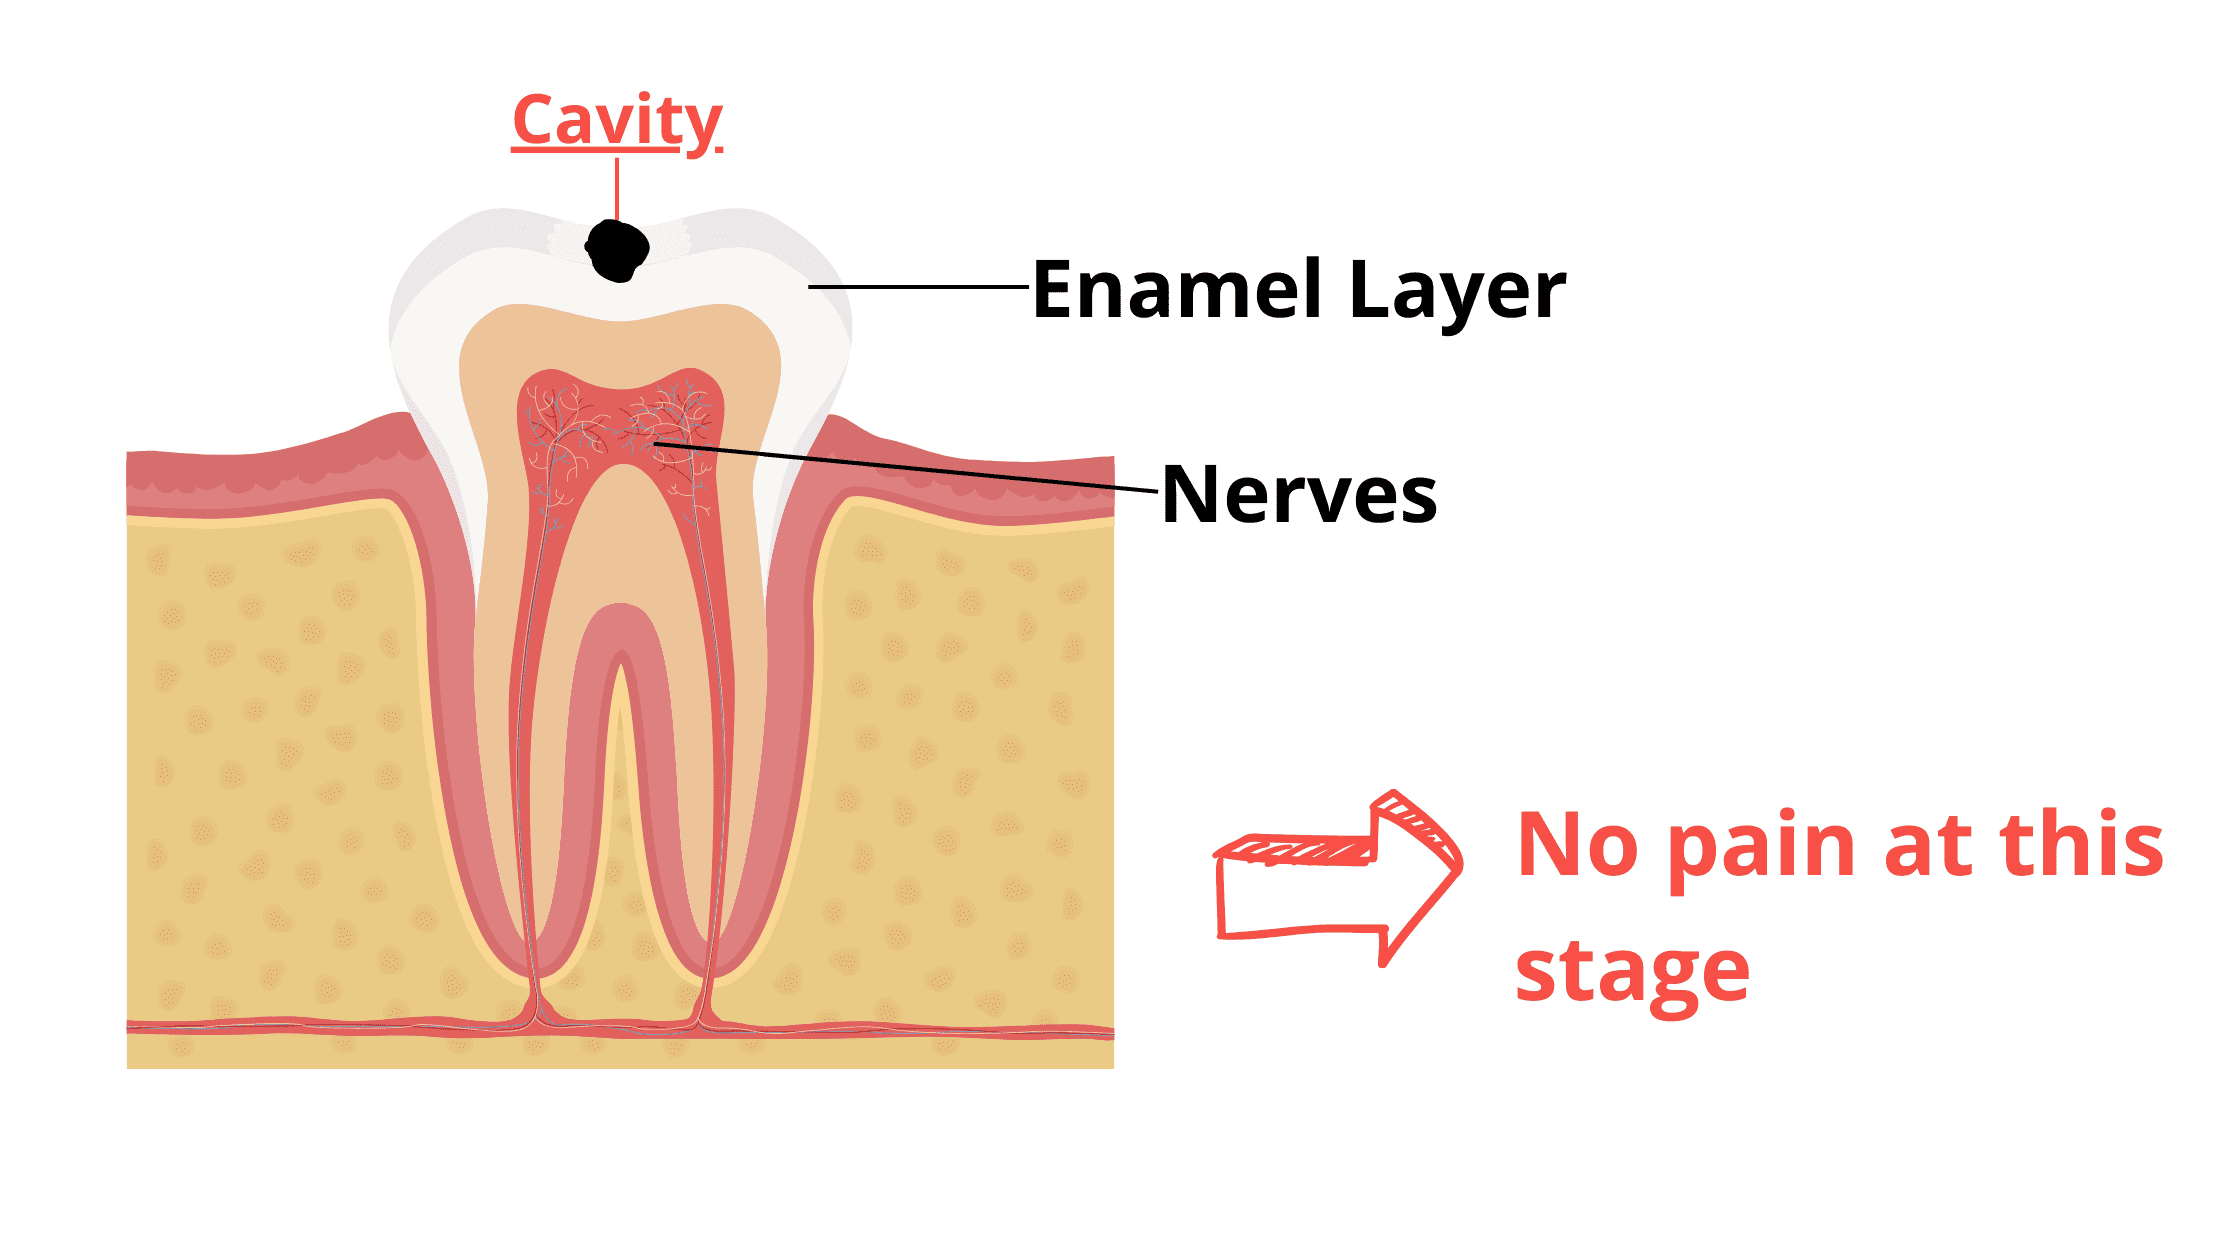 Enamel cavity is not painful